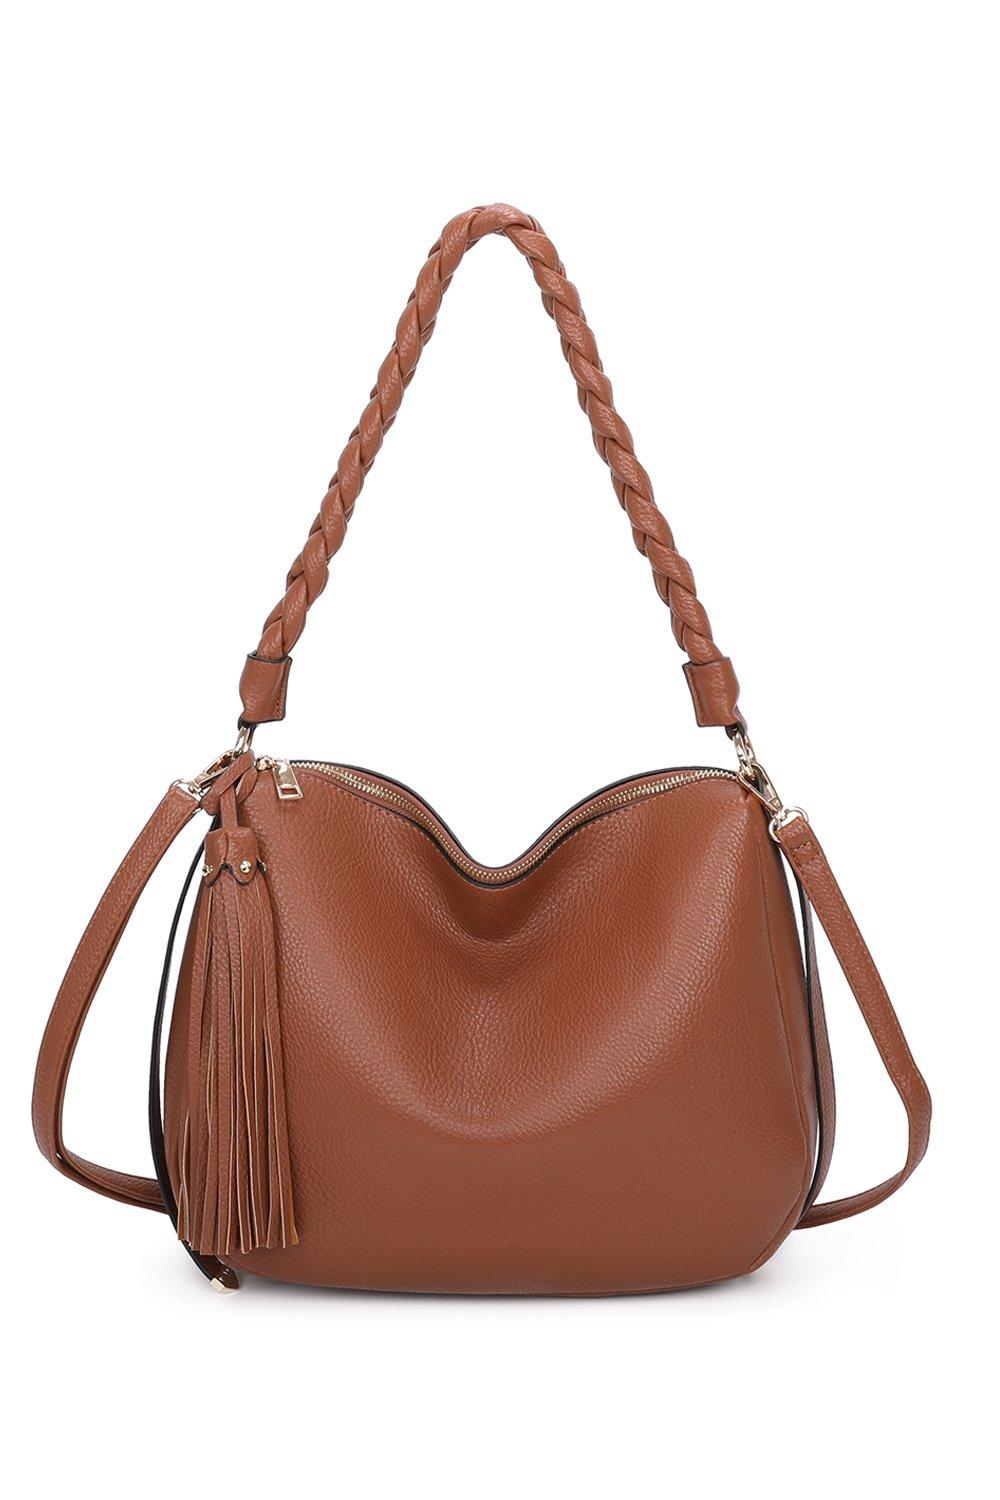 DEBENHAMS COLLECTION BROWN Faux Leather Shoulder Bag Handbag £6.00 -  PicClick UK